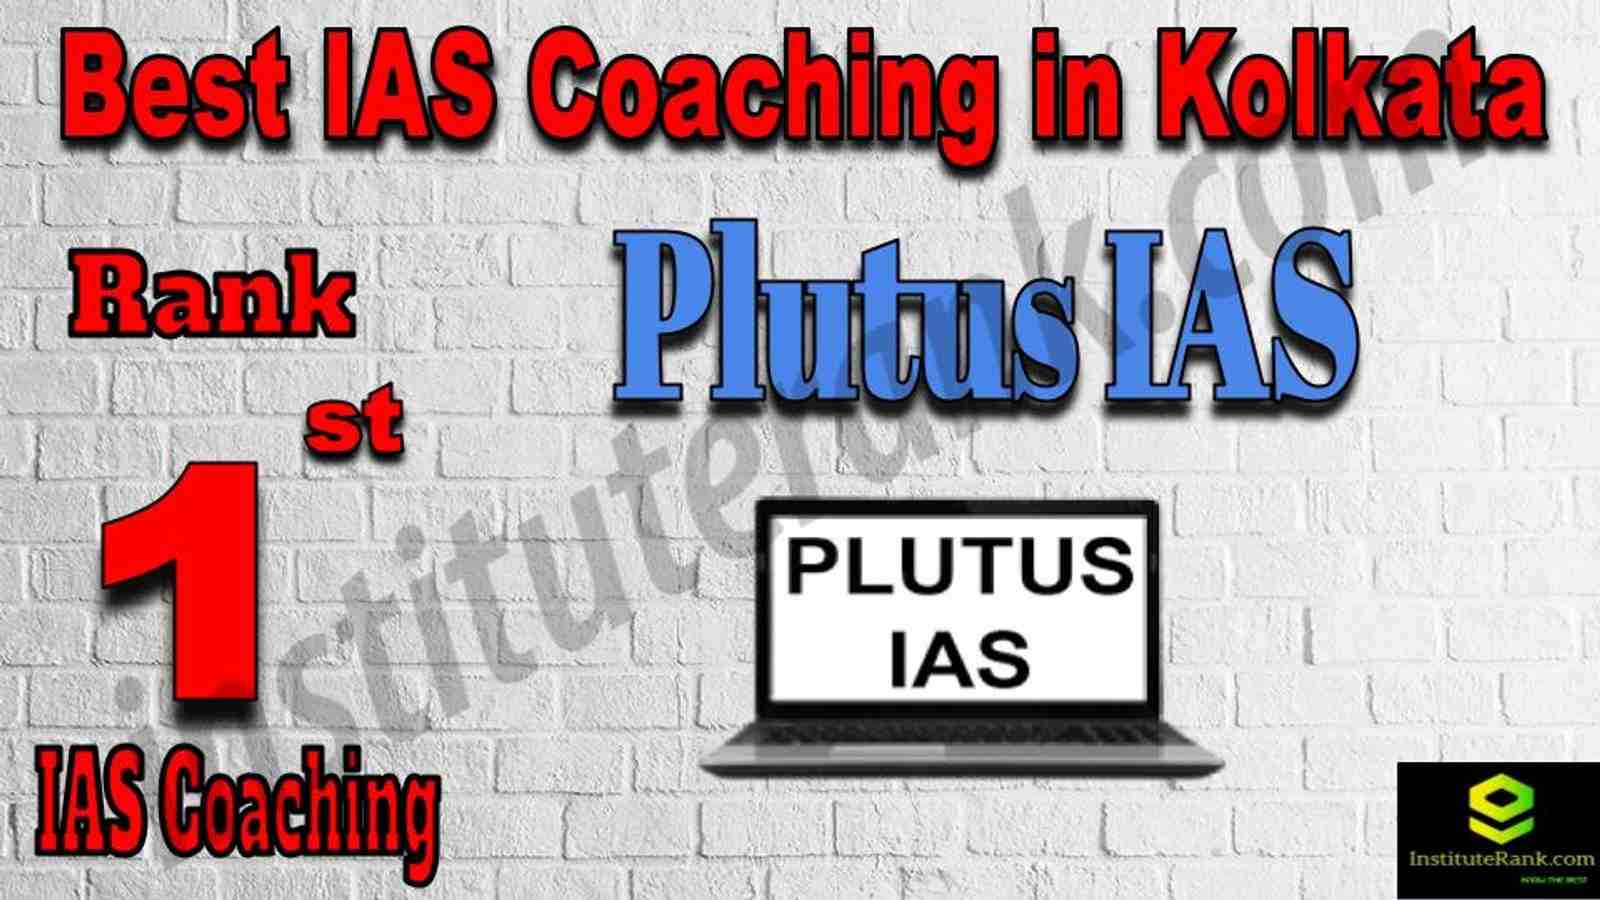 1st Best IAS Coaching in Kolkata